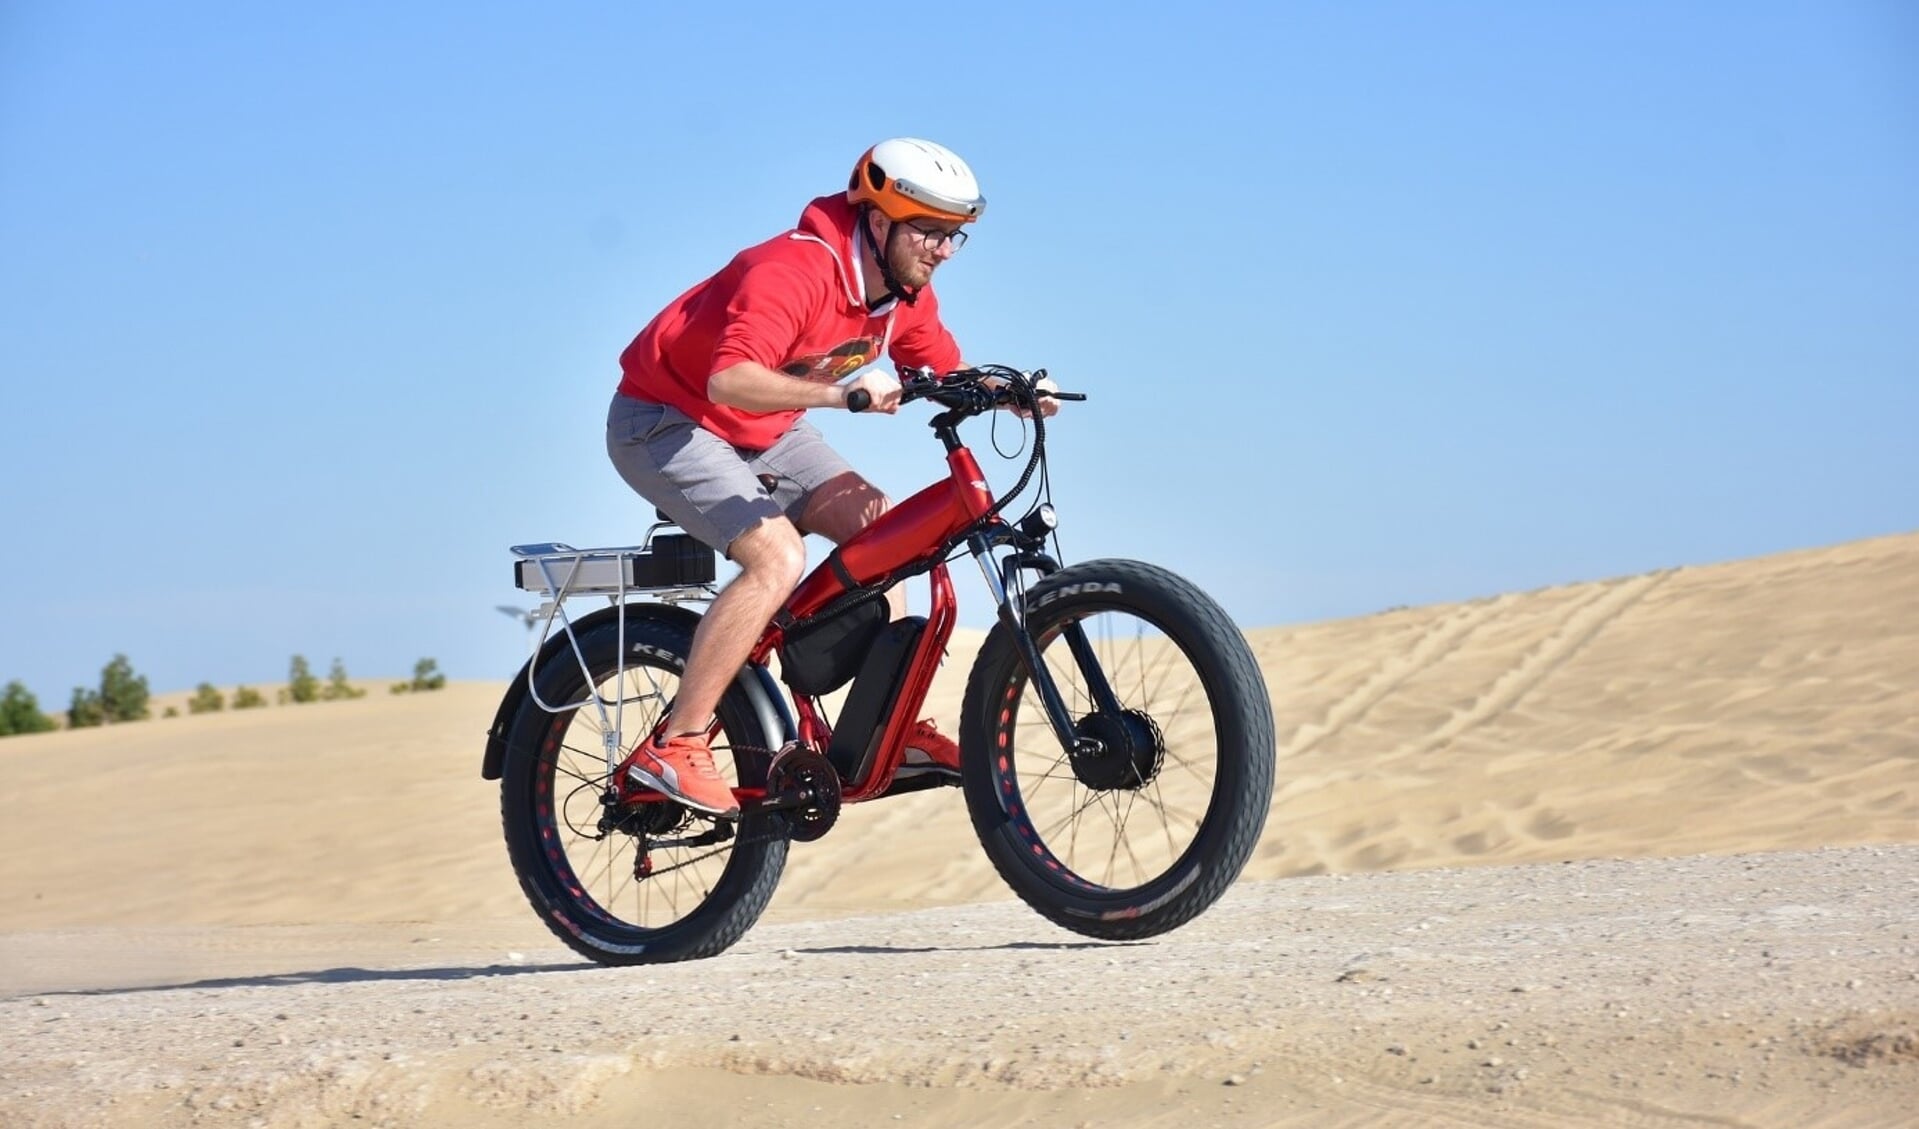 https://pixabay.com/photos/electric-bike-ride-desert-sand-6511656/